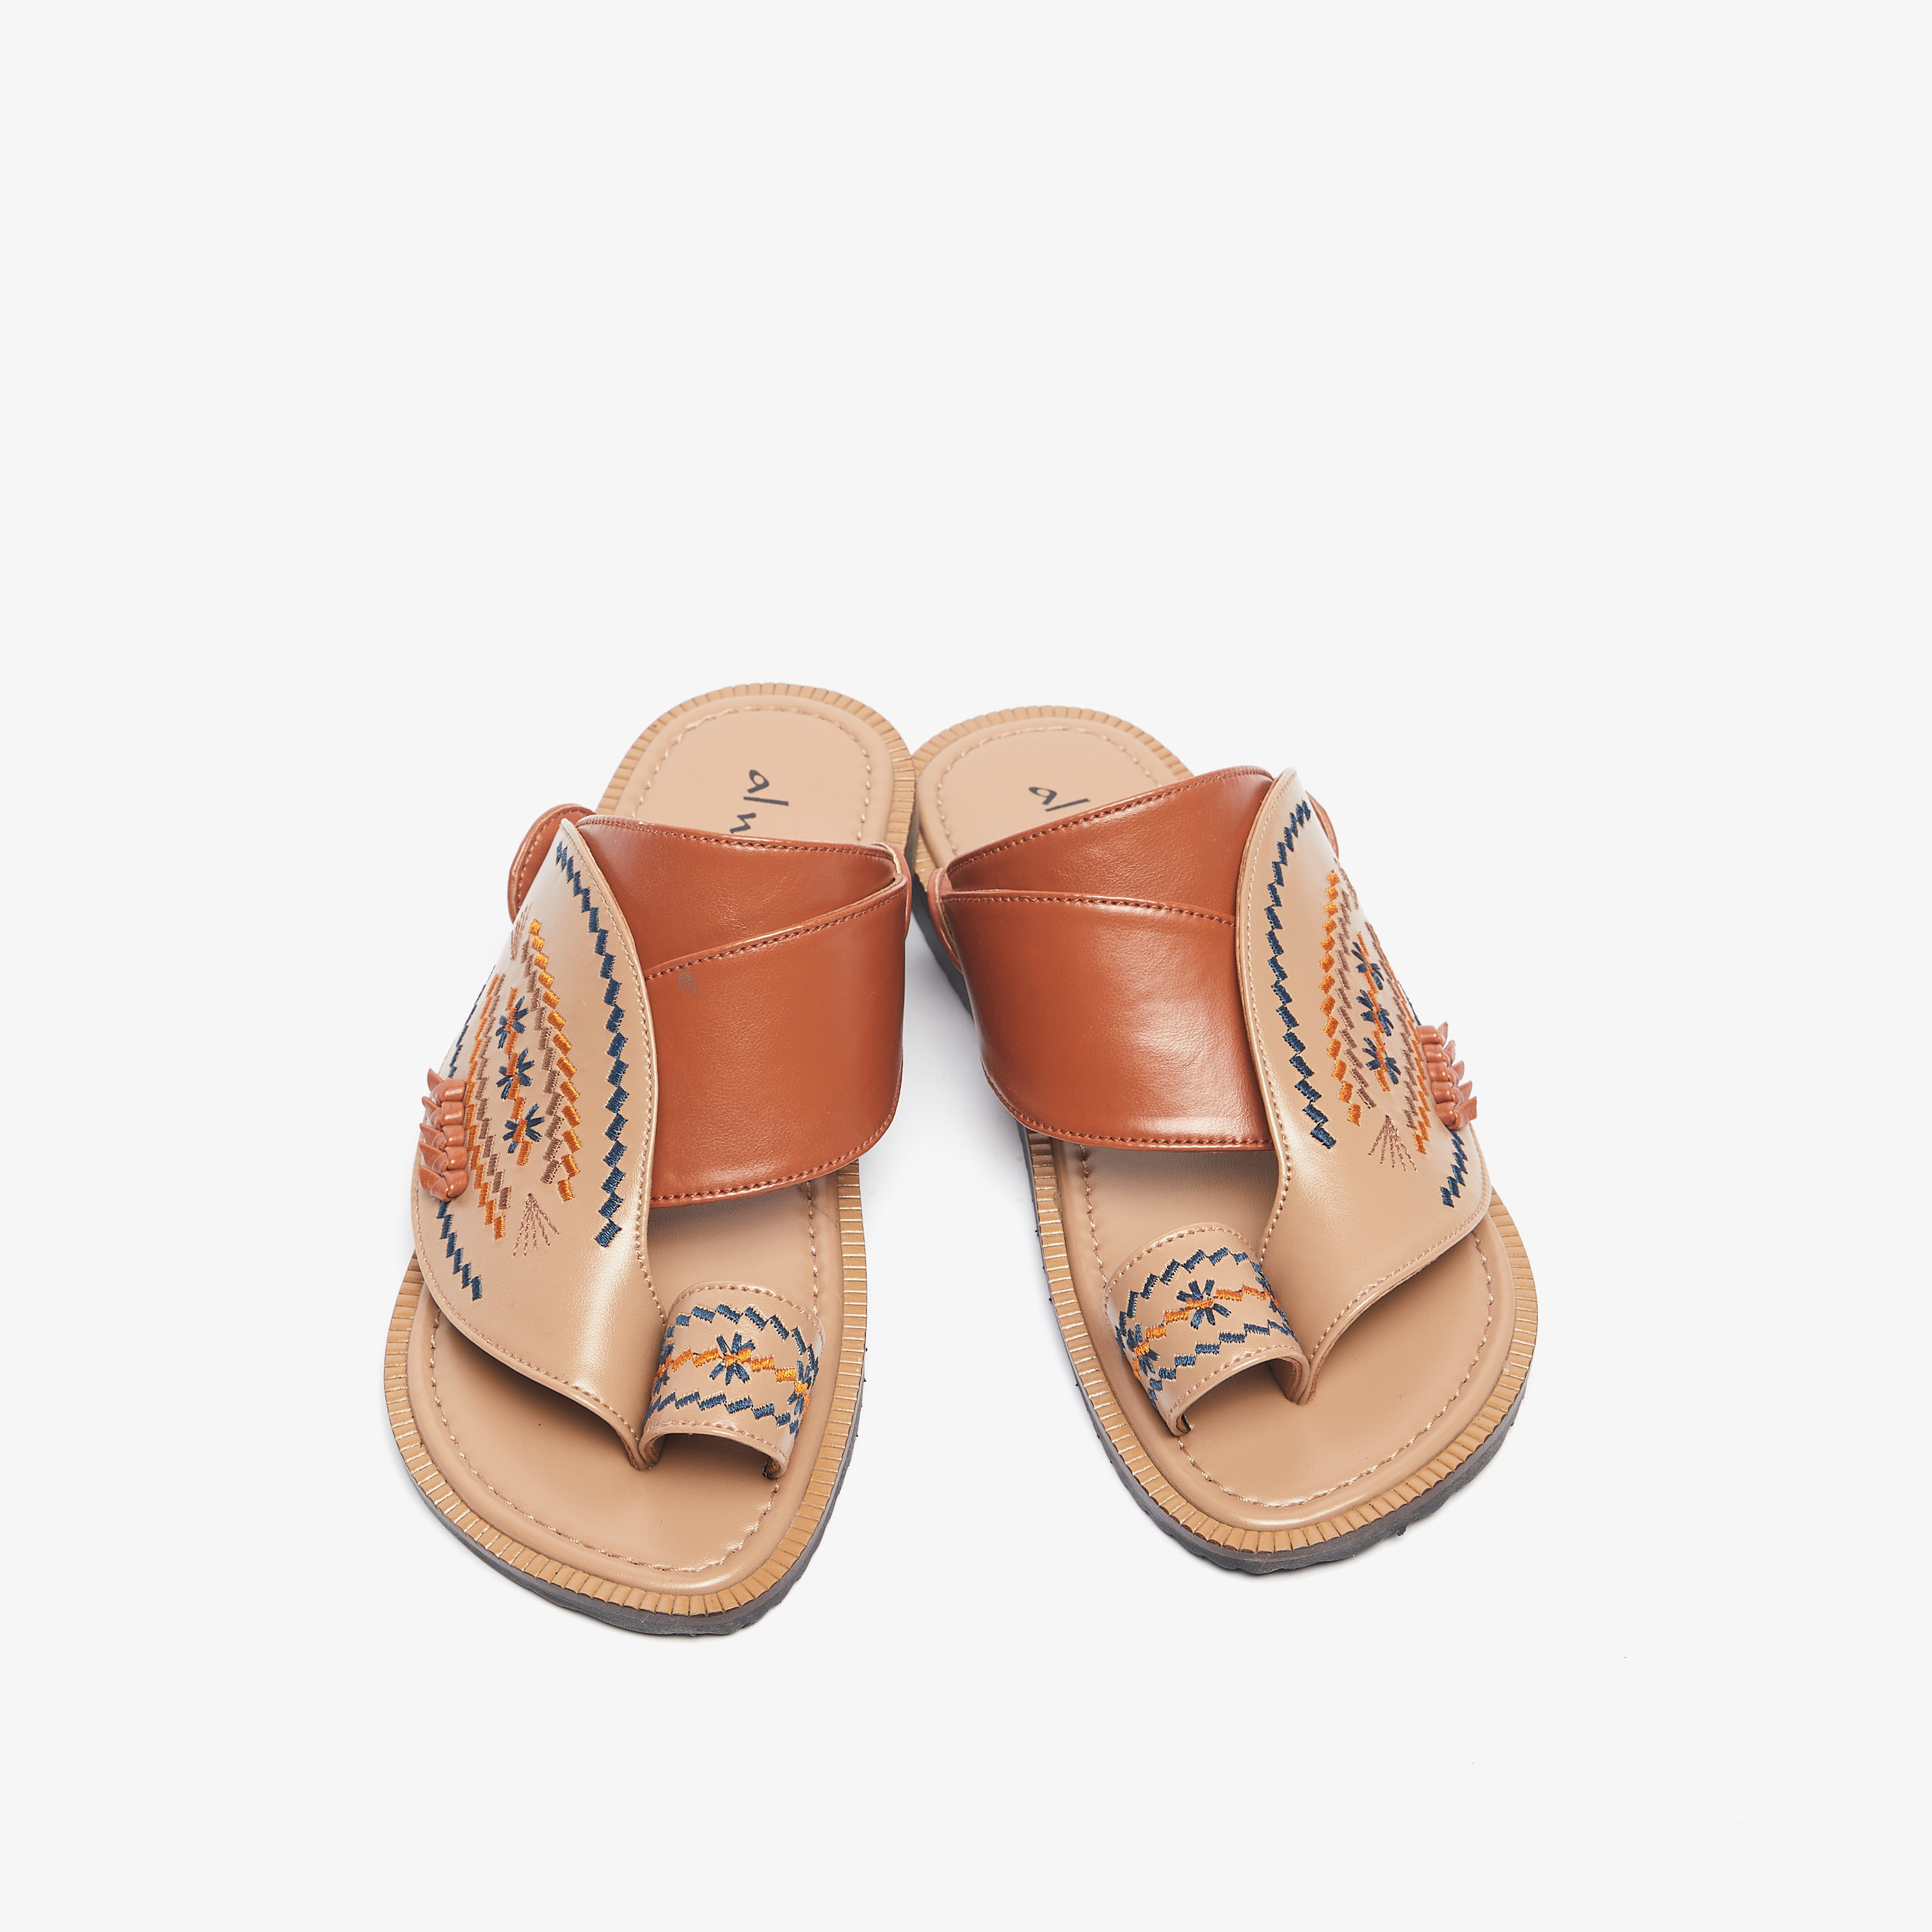 Details 171+ saudi arabia sandals latest